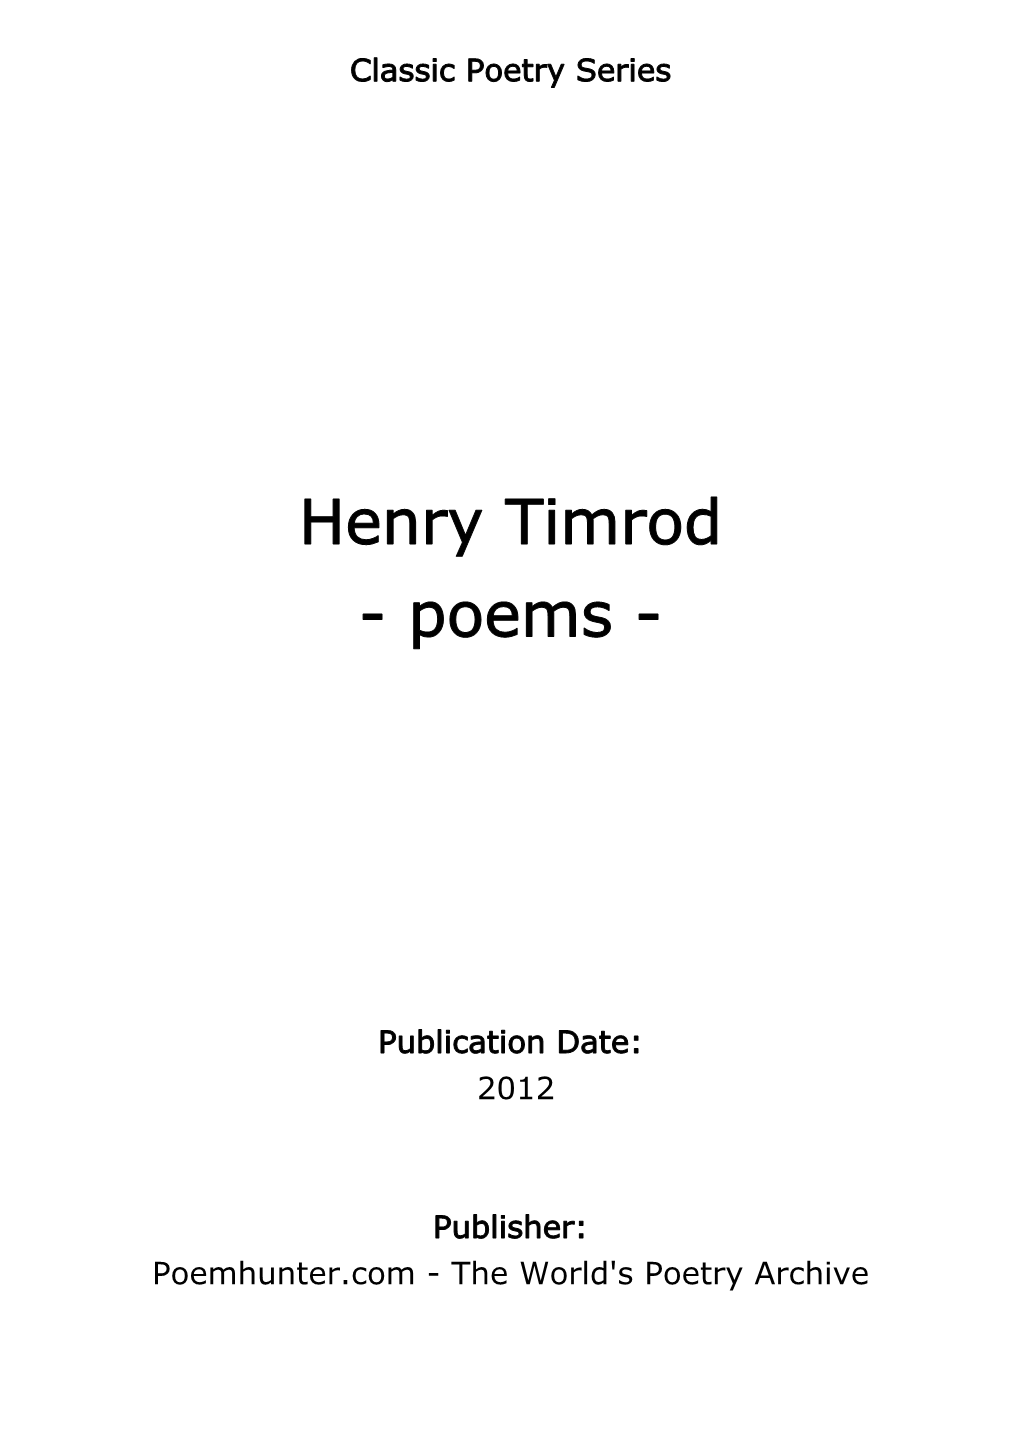 Henry Timrod - Poems